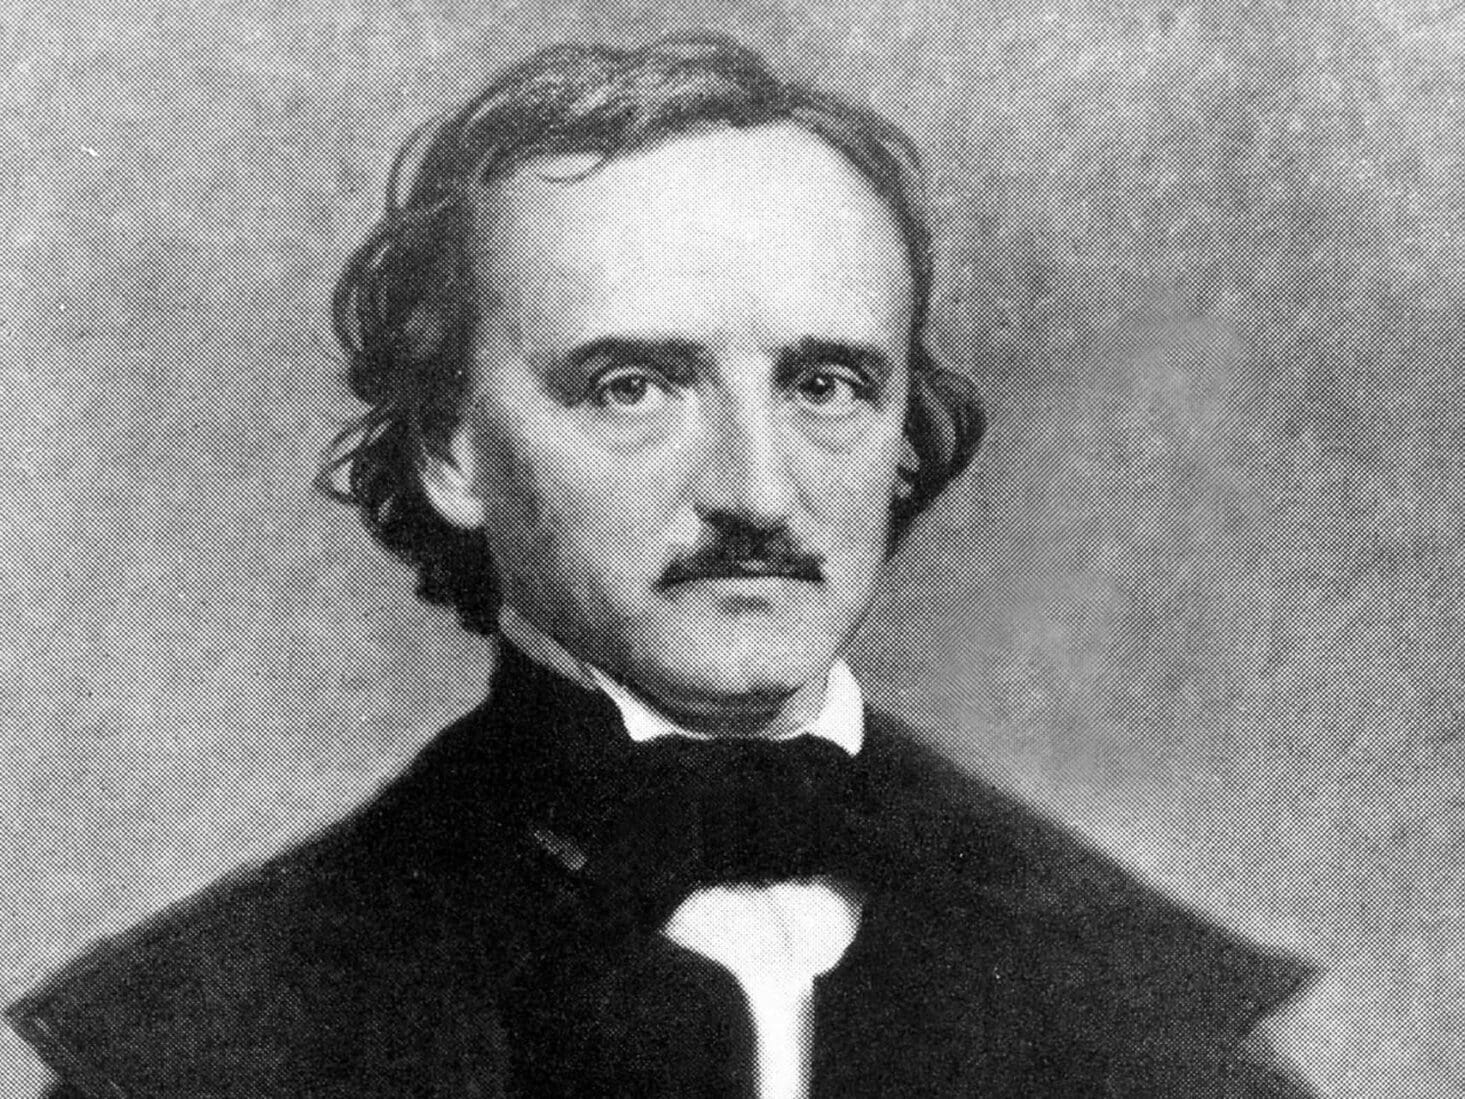 Pale Blue Eye true story - did Poe investigate a murder?